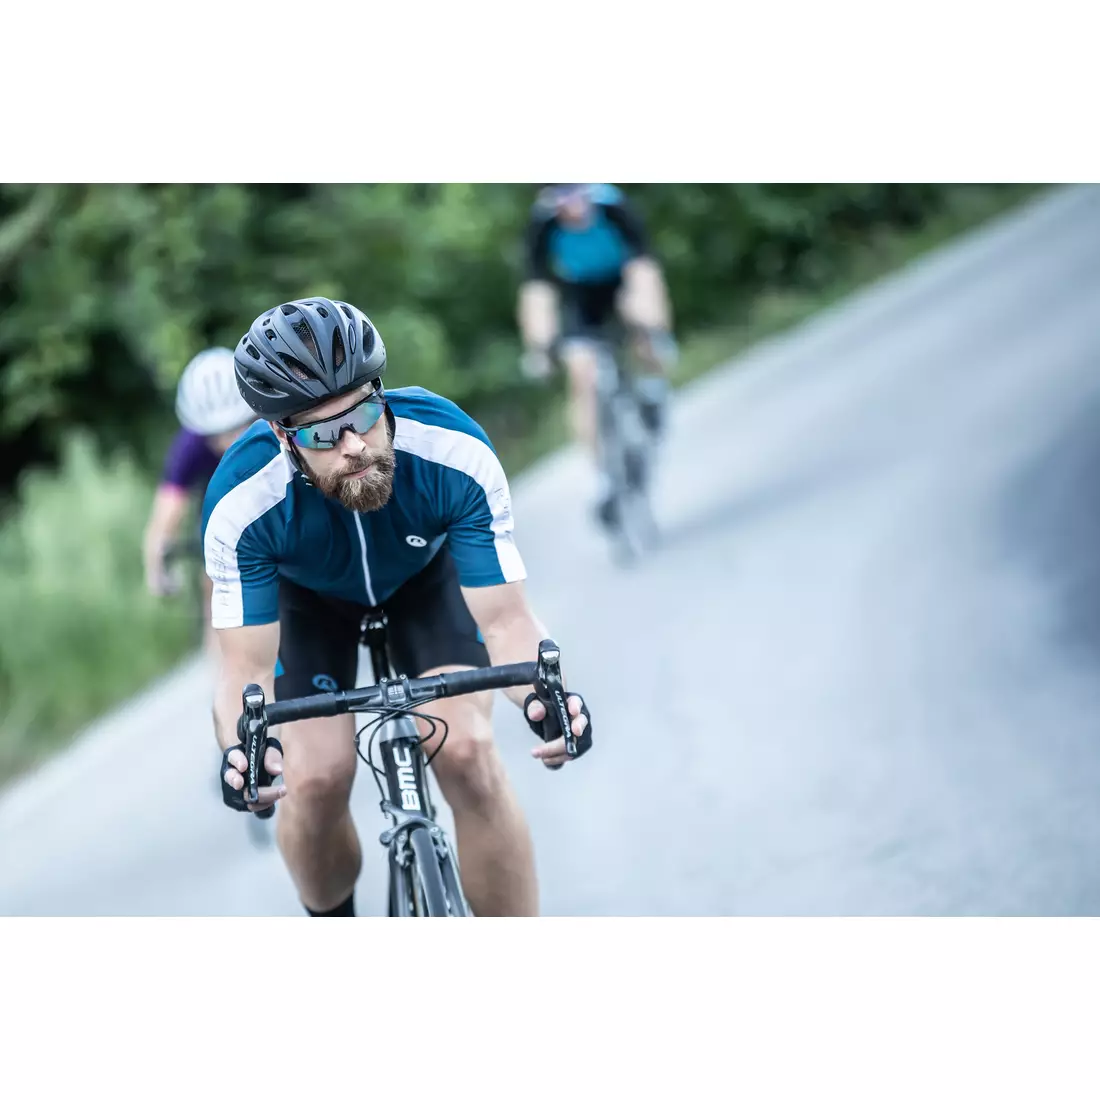 ROGELLI EXPLORE men's cycling jersey, blue